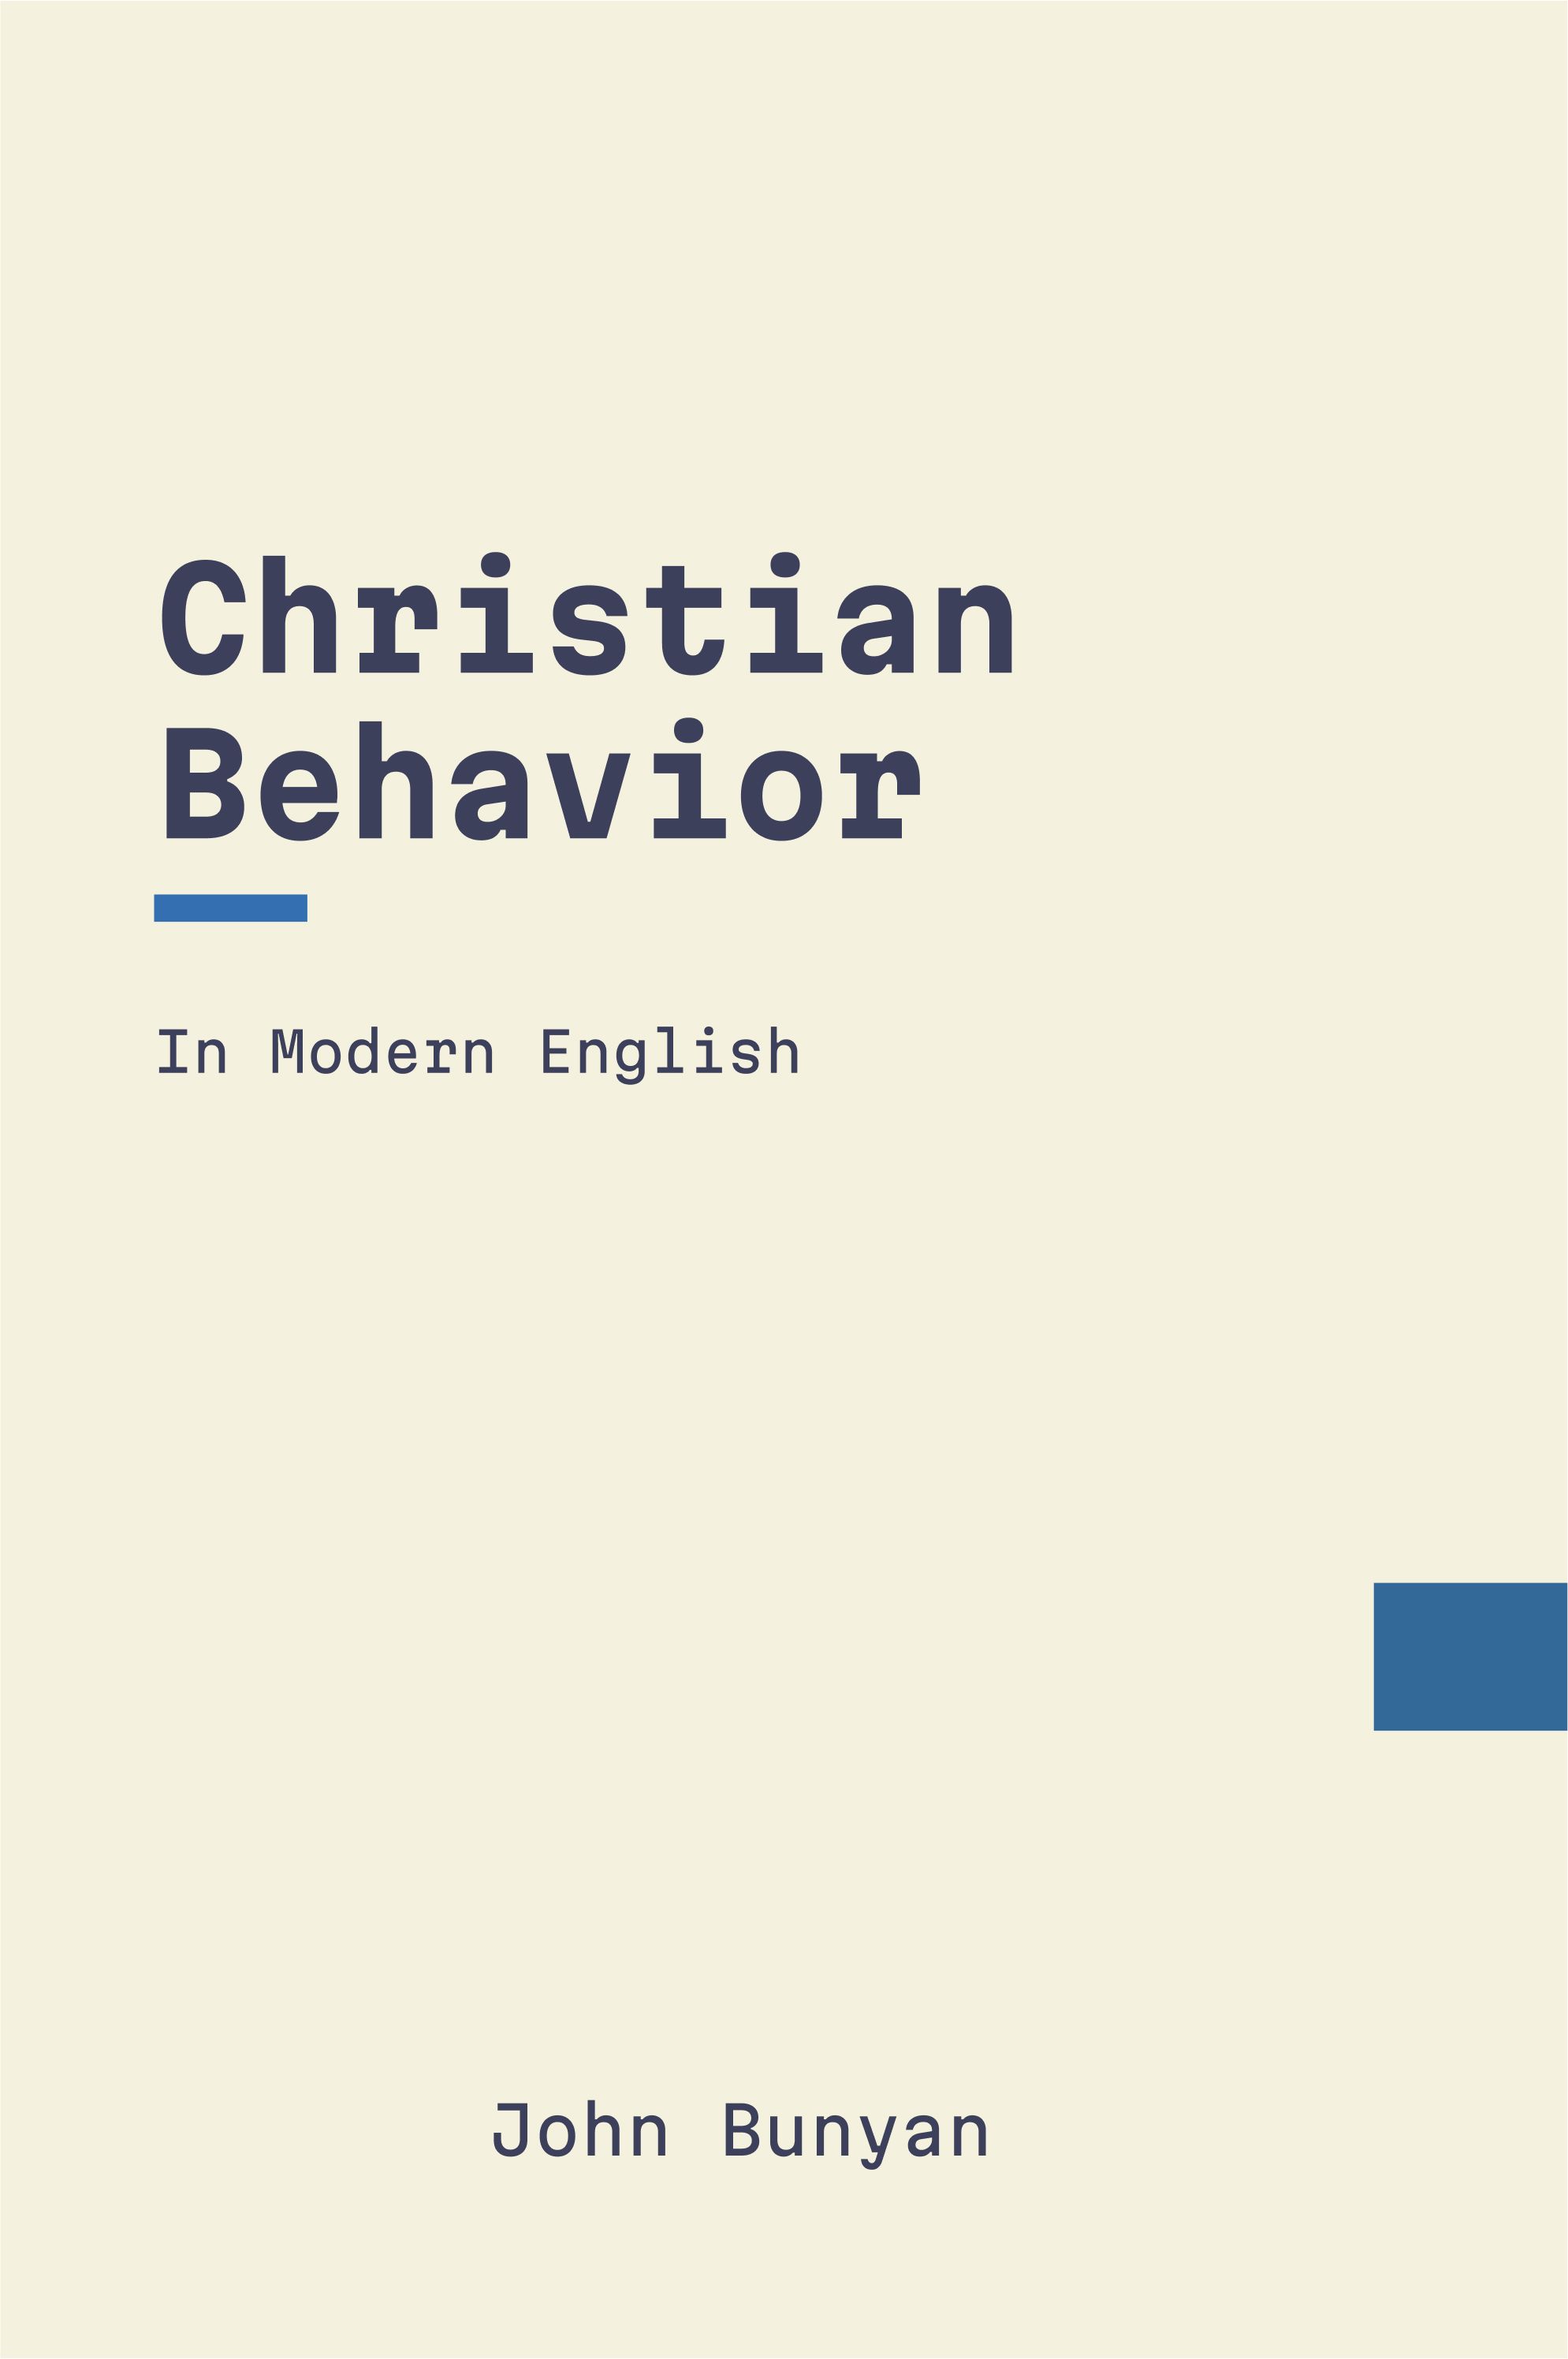 Christian Behavior by John Bunyan